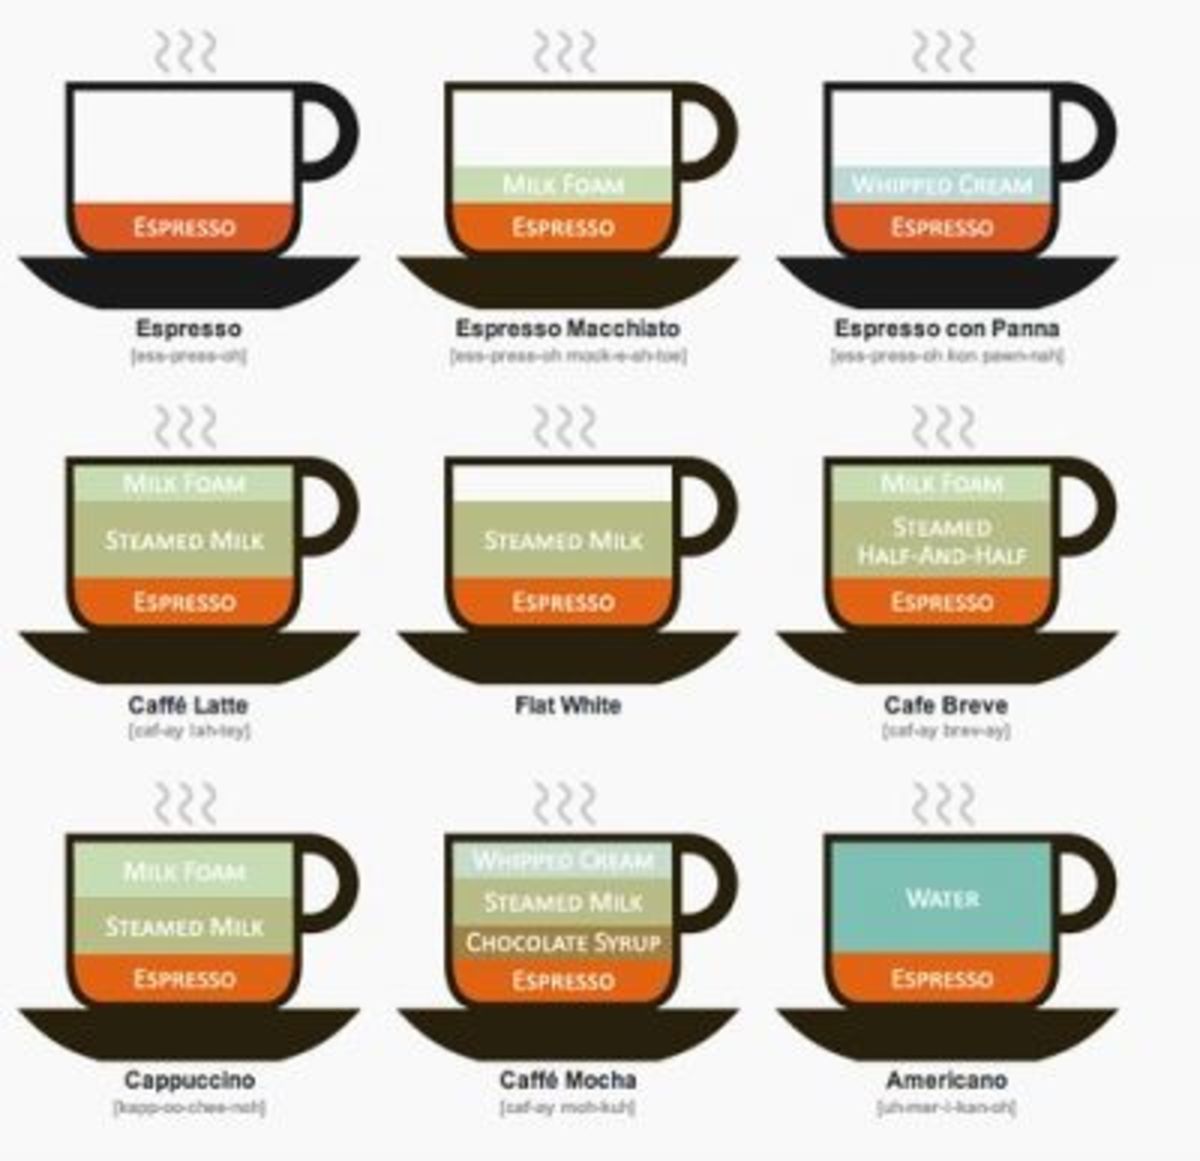 Cofee Drinks Illustrated